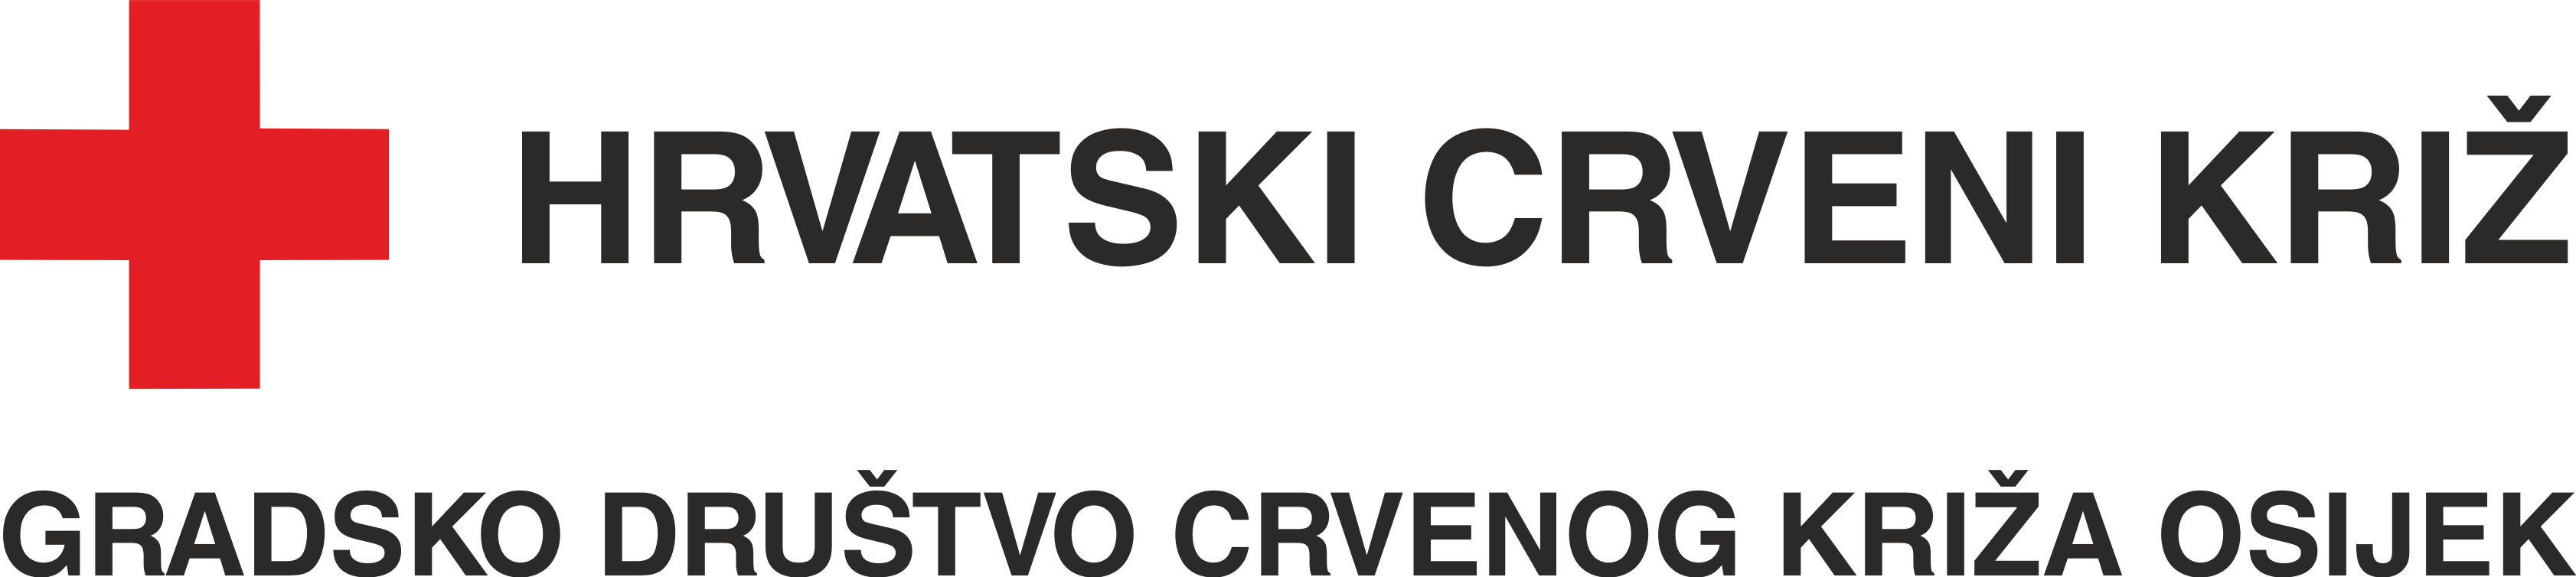 GDCK_Osijek_logo_r